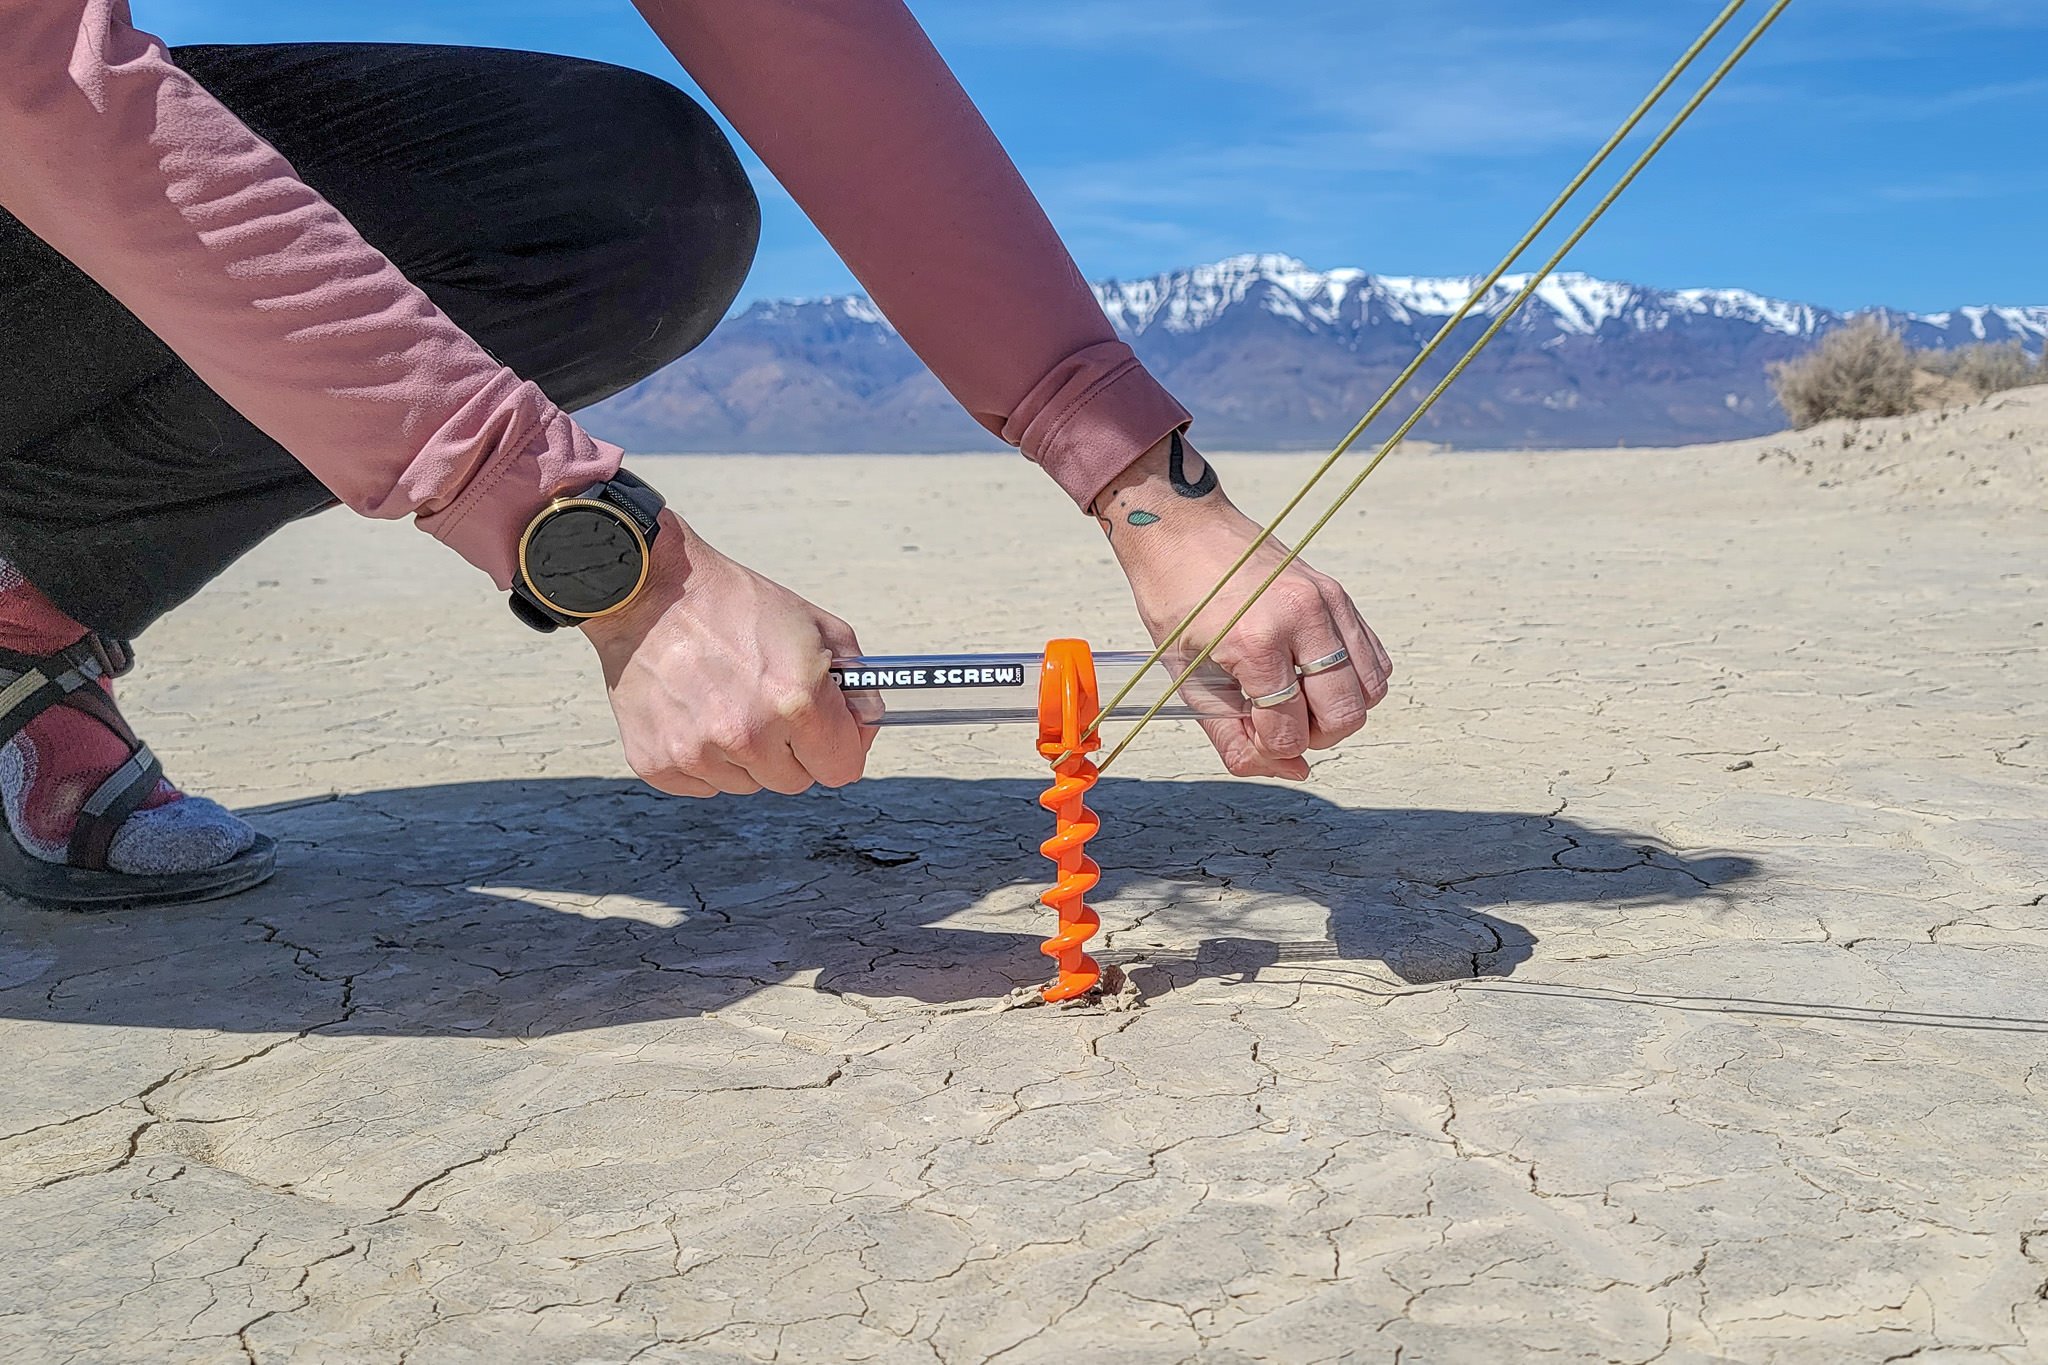 Using Orangescrew Anchors to camp in the Alvord Desert